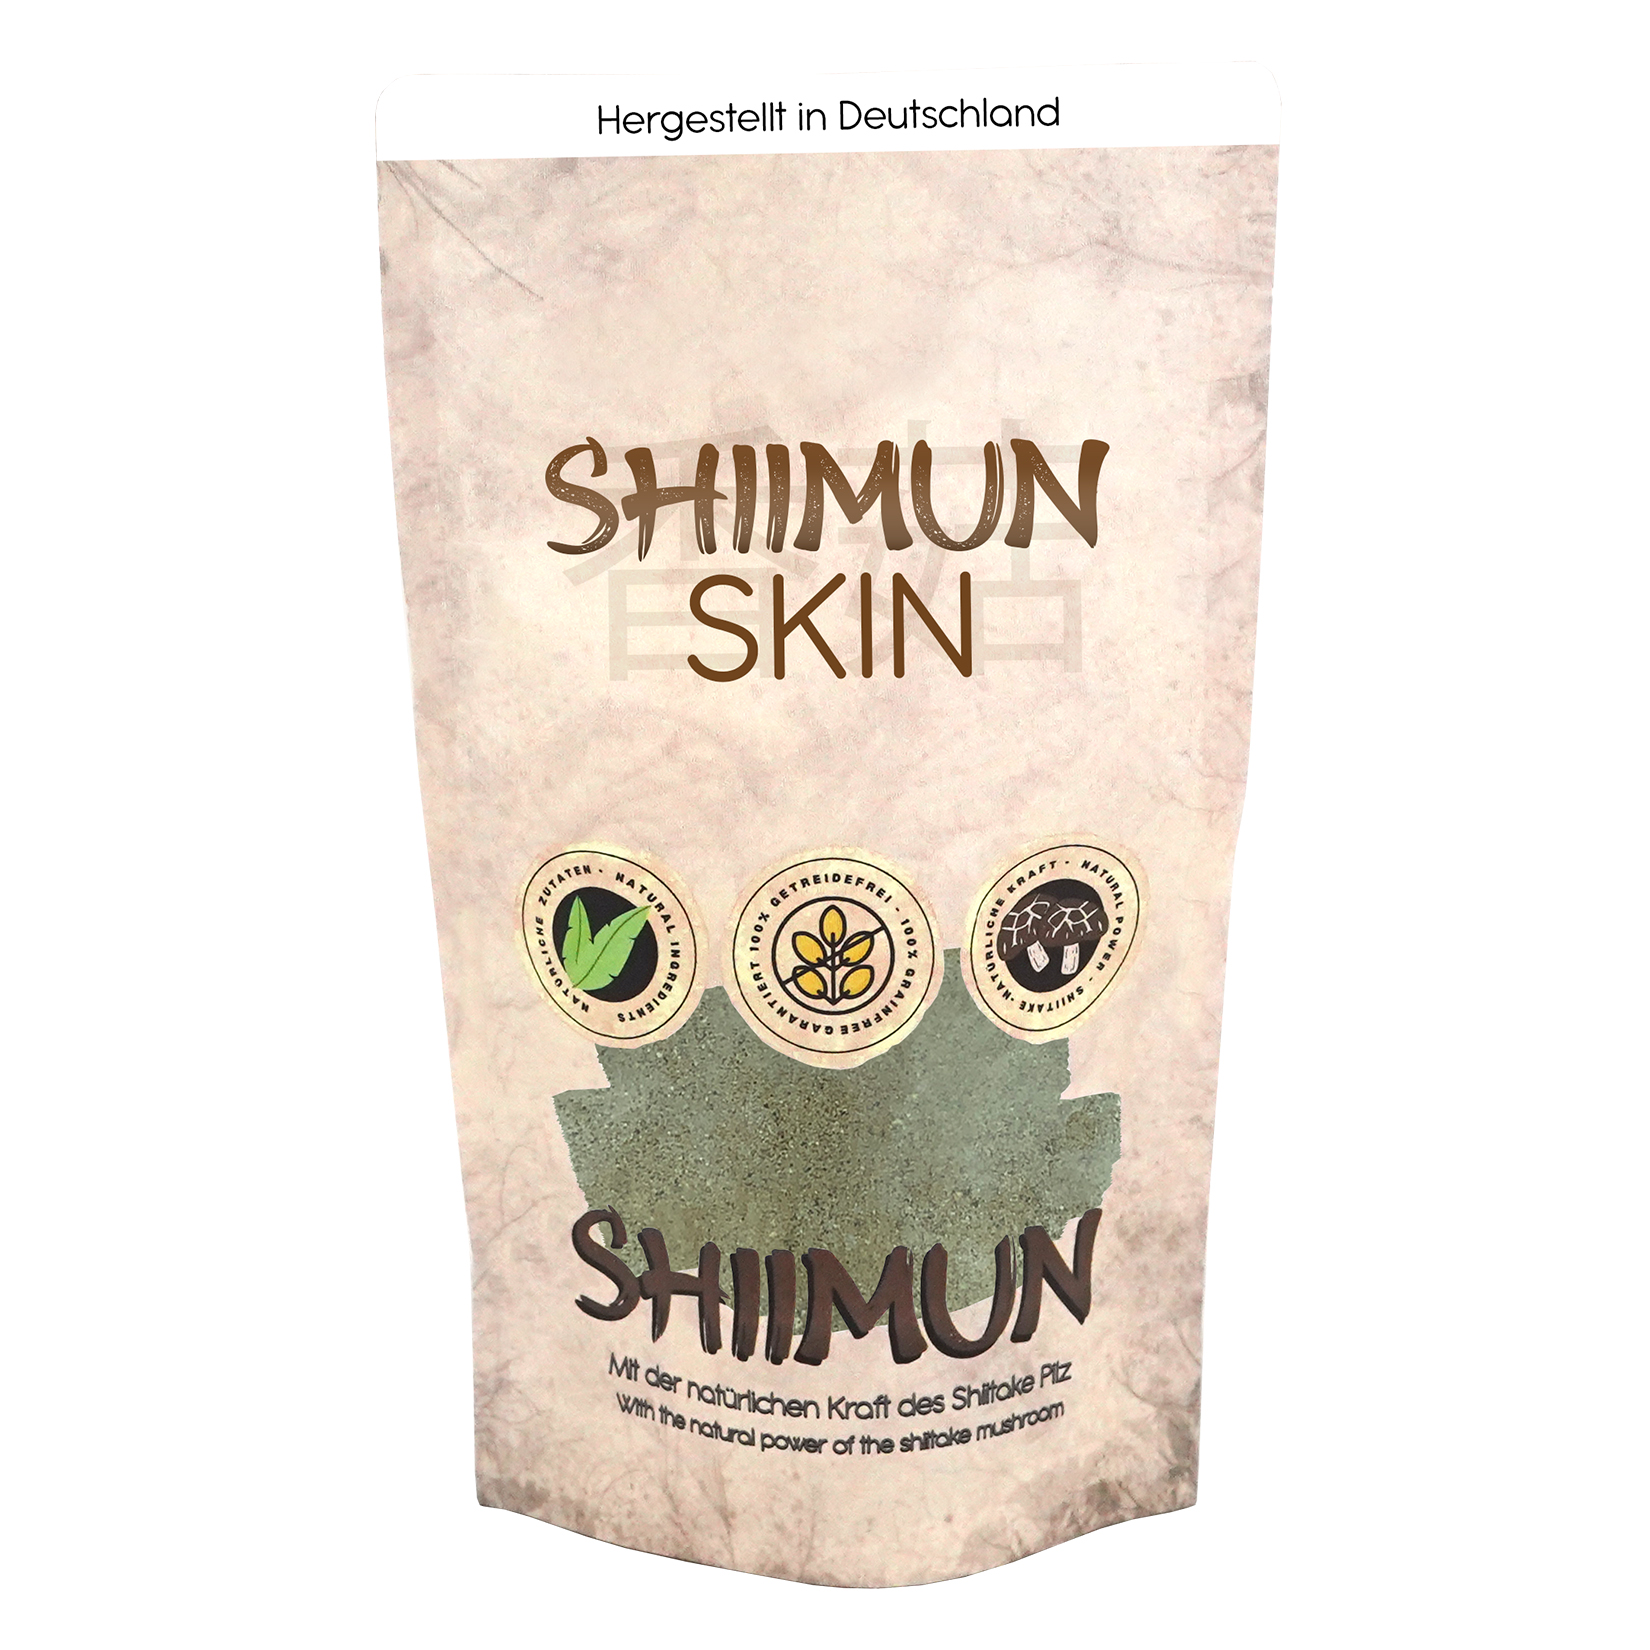 Shiimun skin poudre - 50g